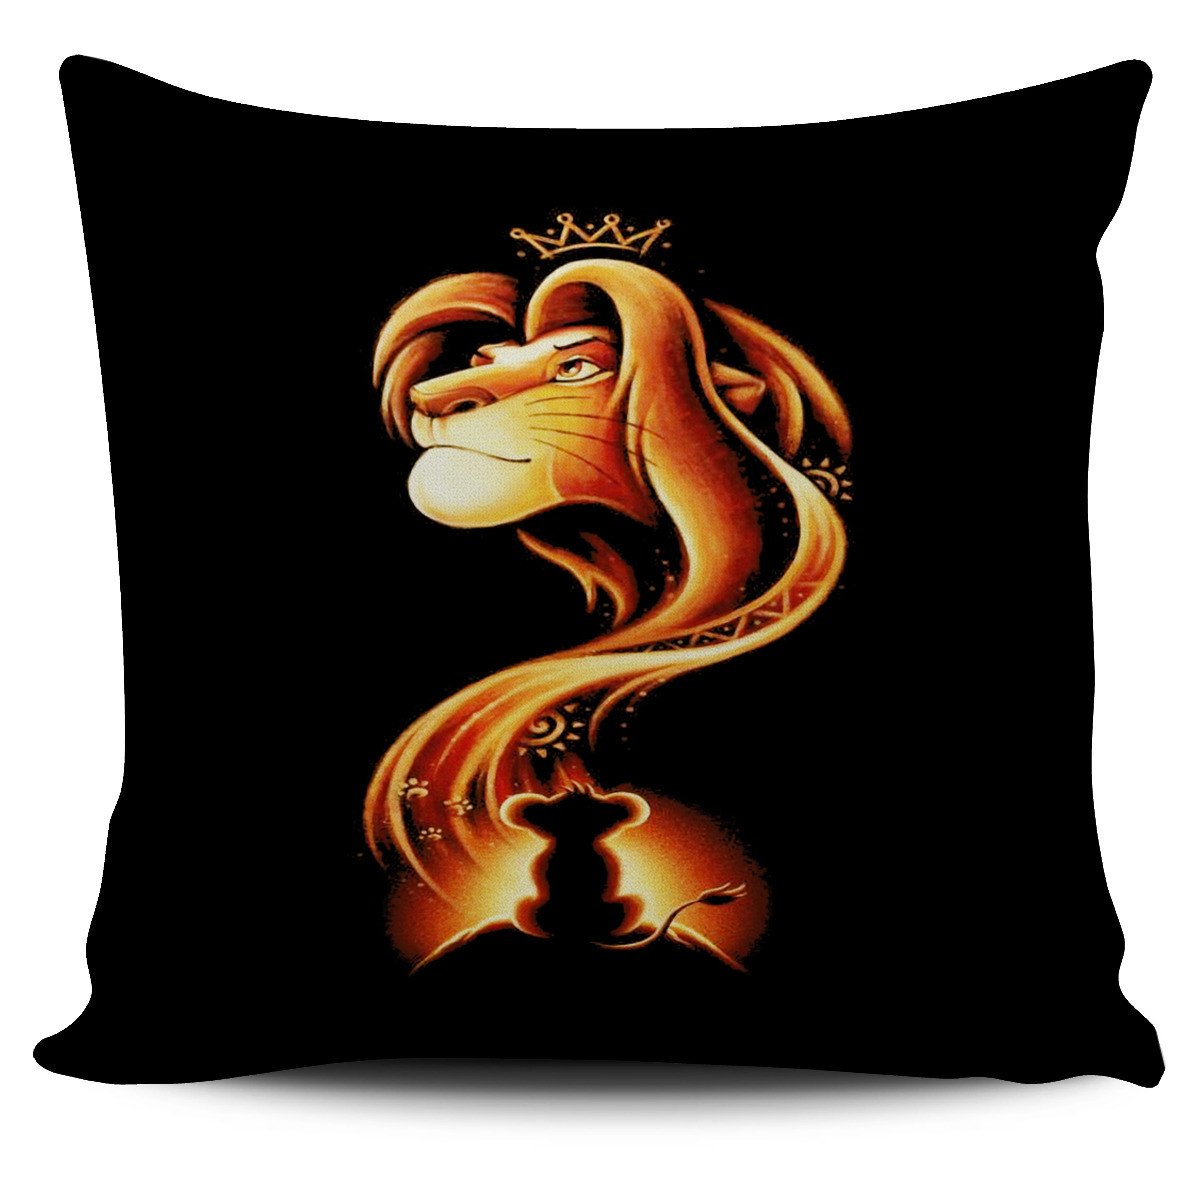 Simba Lion King Pillow Cover 1